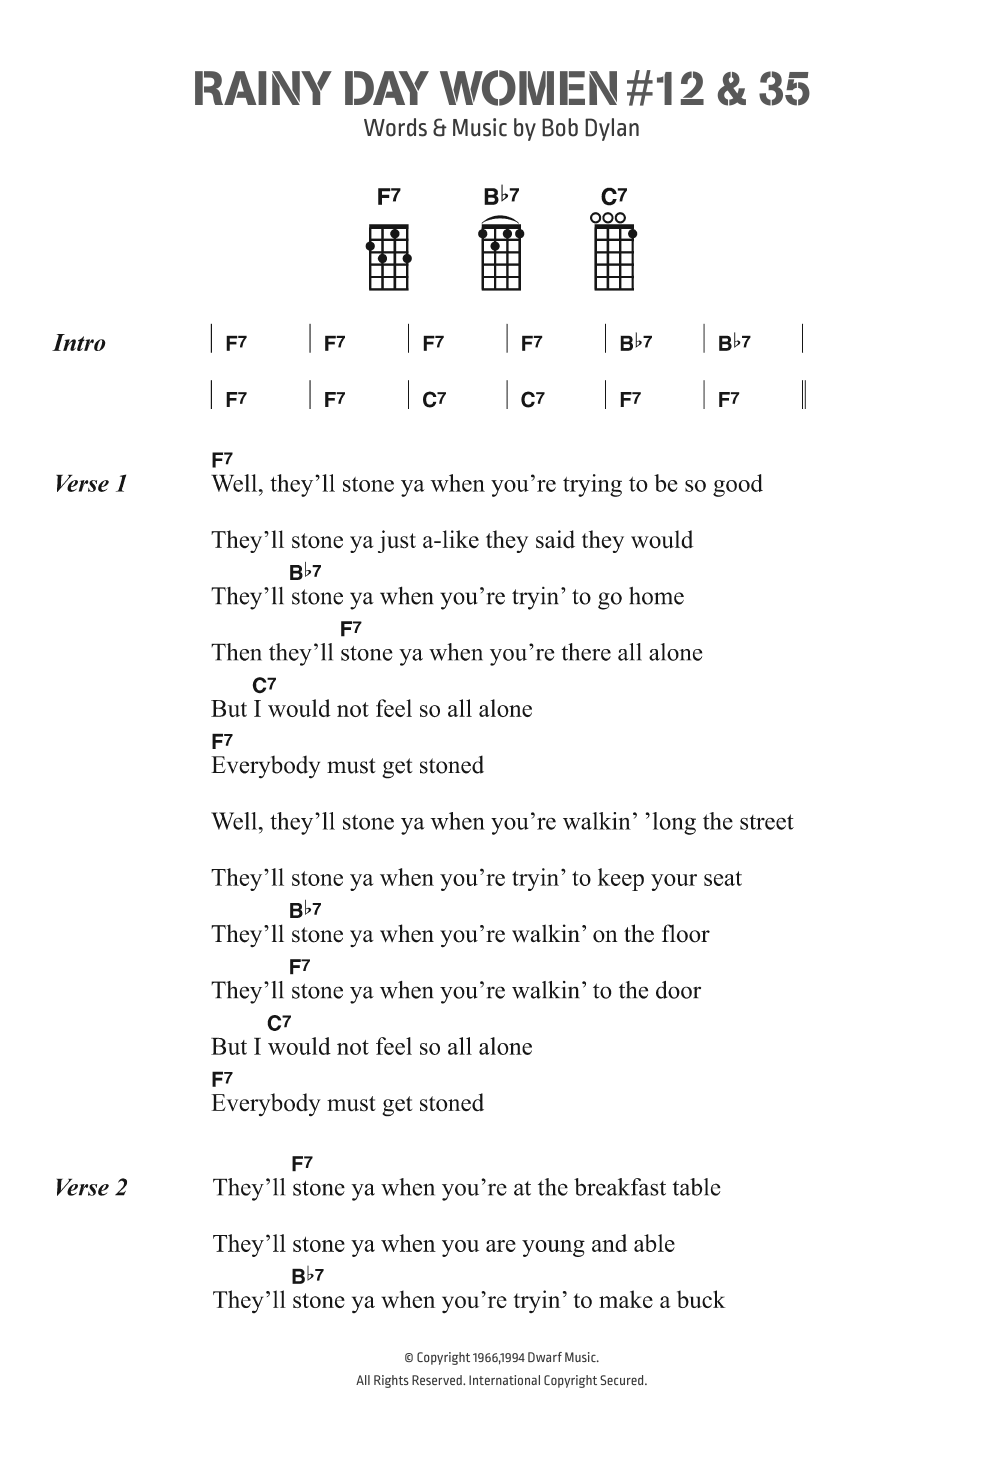 Bob Dylan Rainy Day Women #12 and #35 Sheet Music Notes & Chords for Ukulele Lyrics & Chords - Download or Print PDF